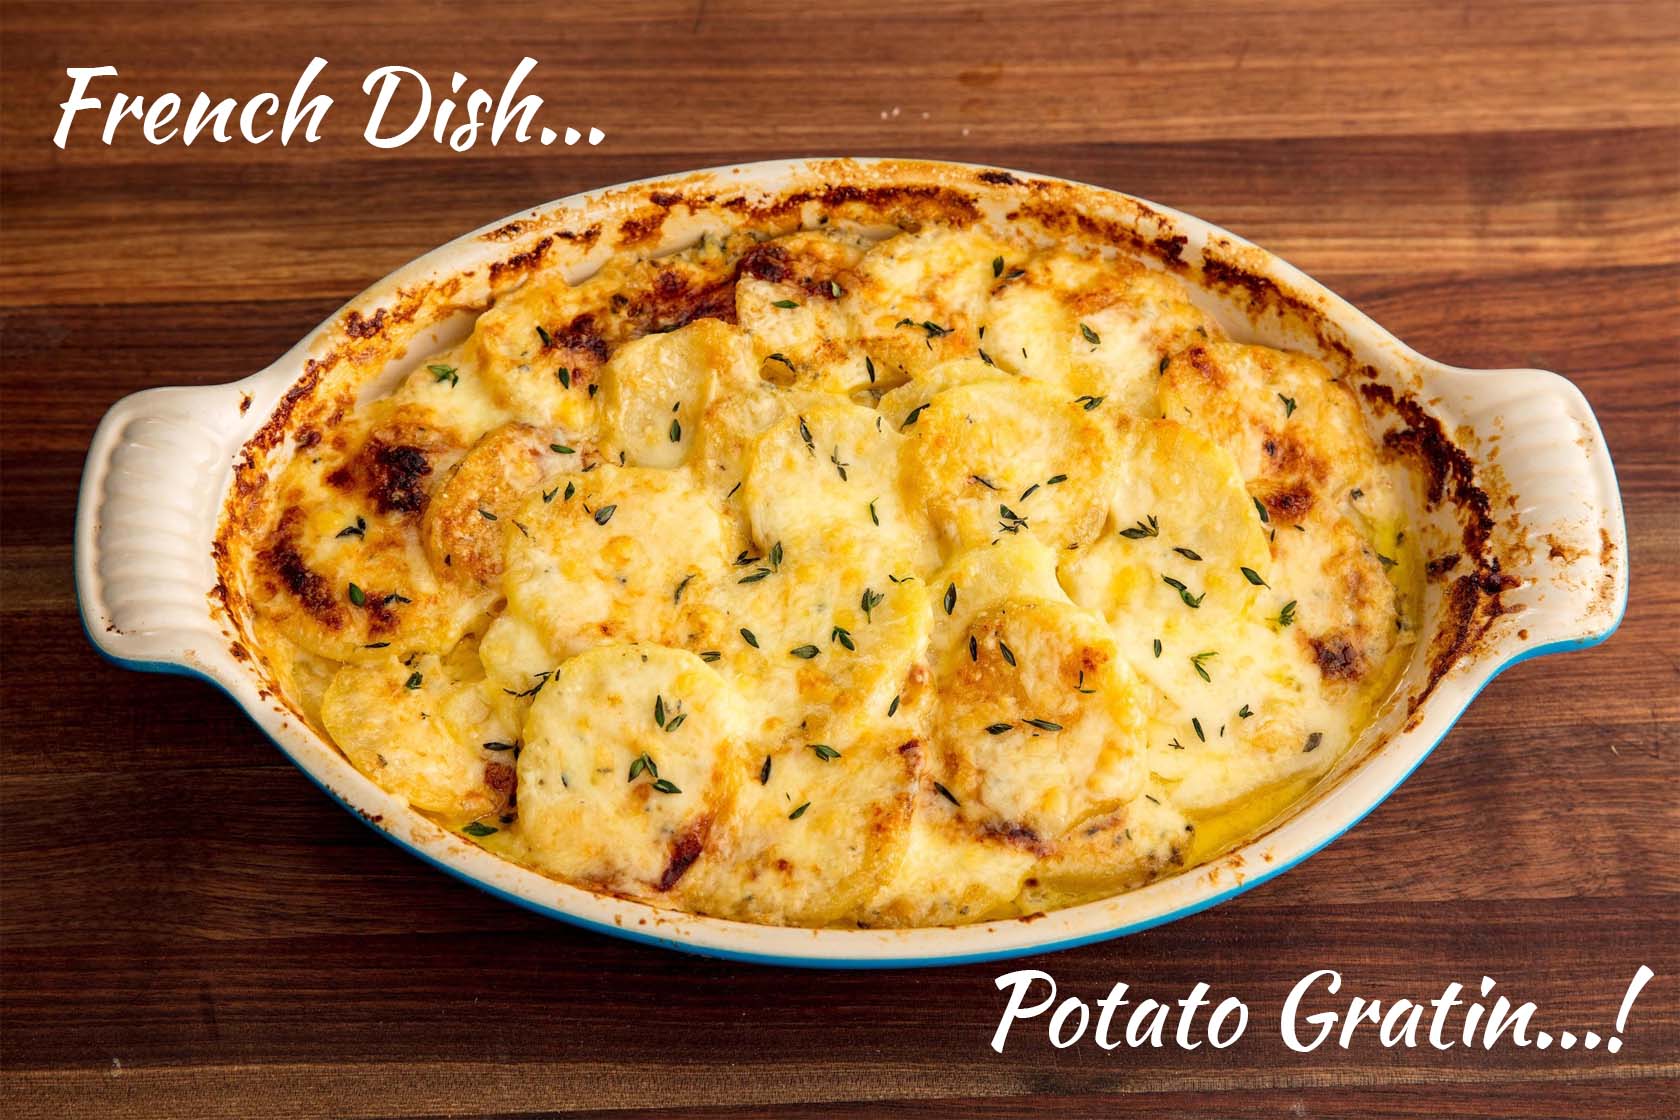 How To Make Potato Gratin?